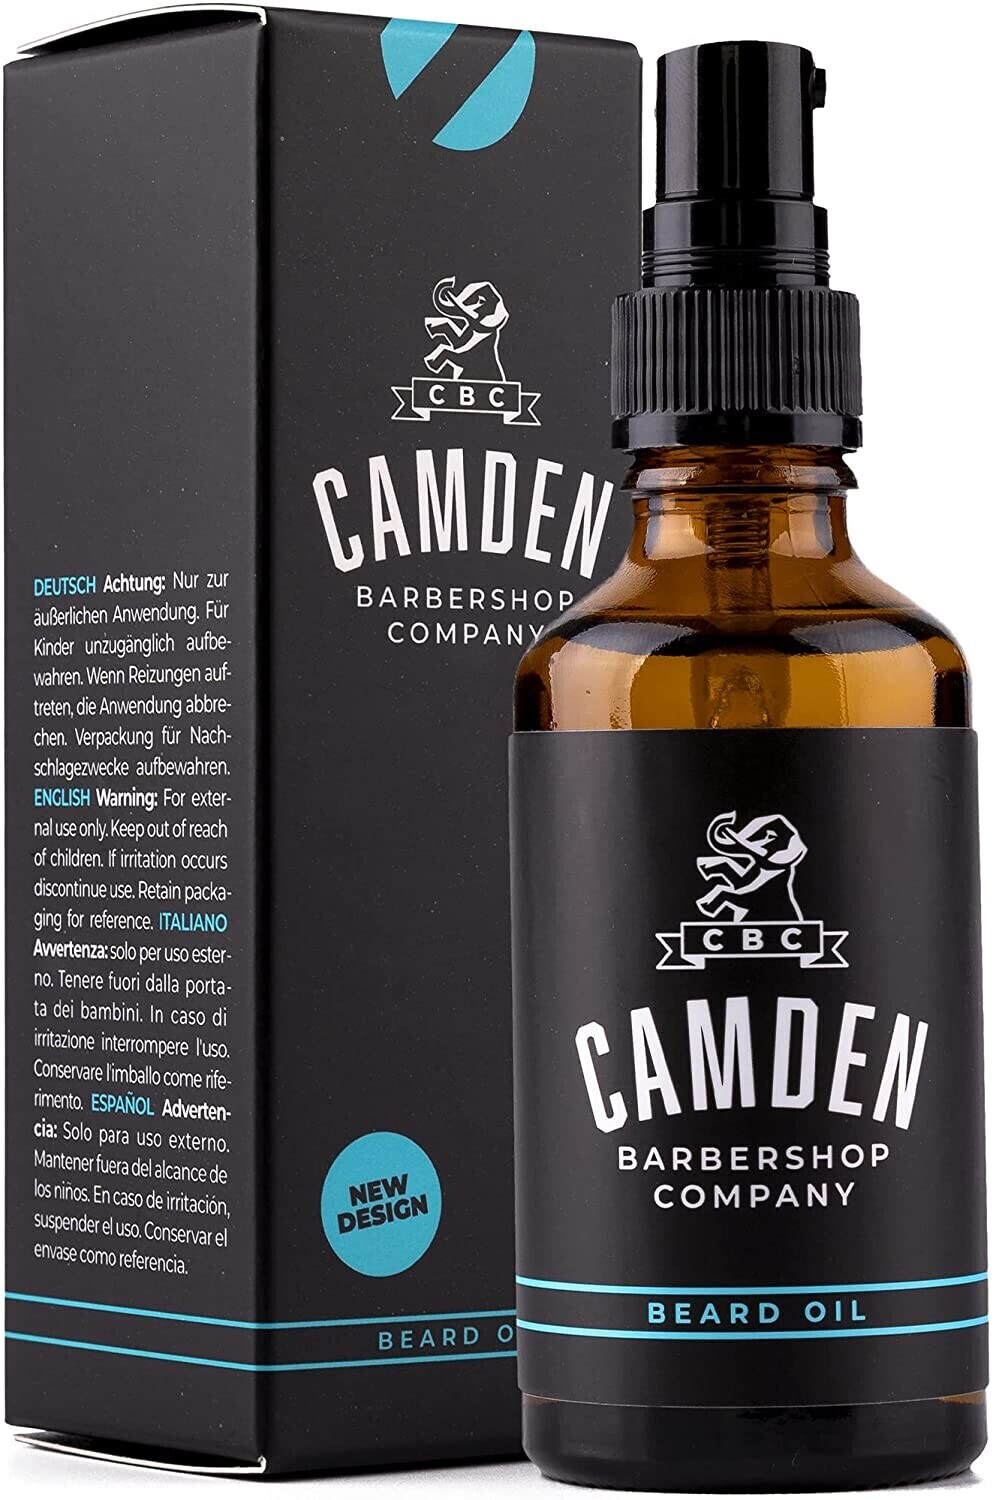 ab bei | 9,99 Company € Oil Original Barbershop Camden (50ml) Preisvergleich Beard